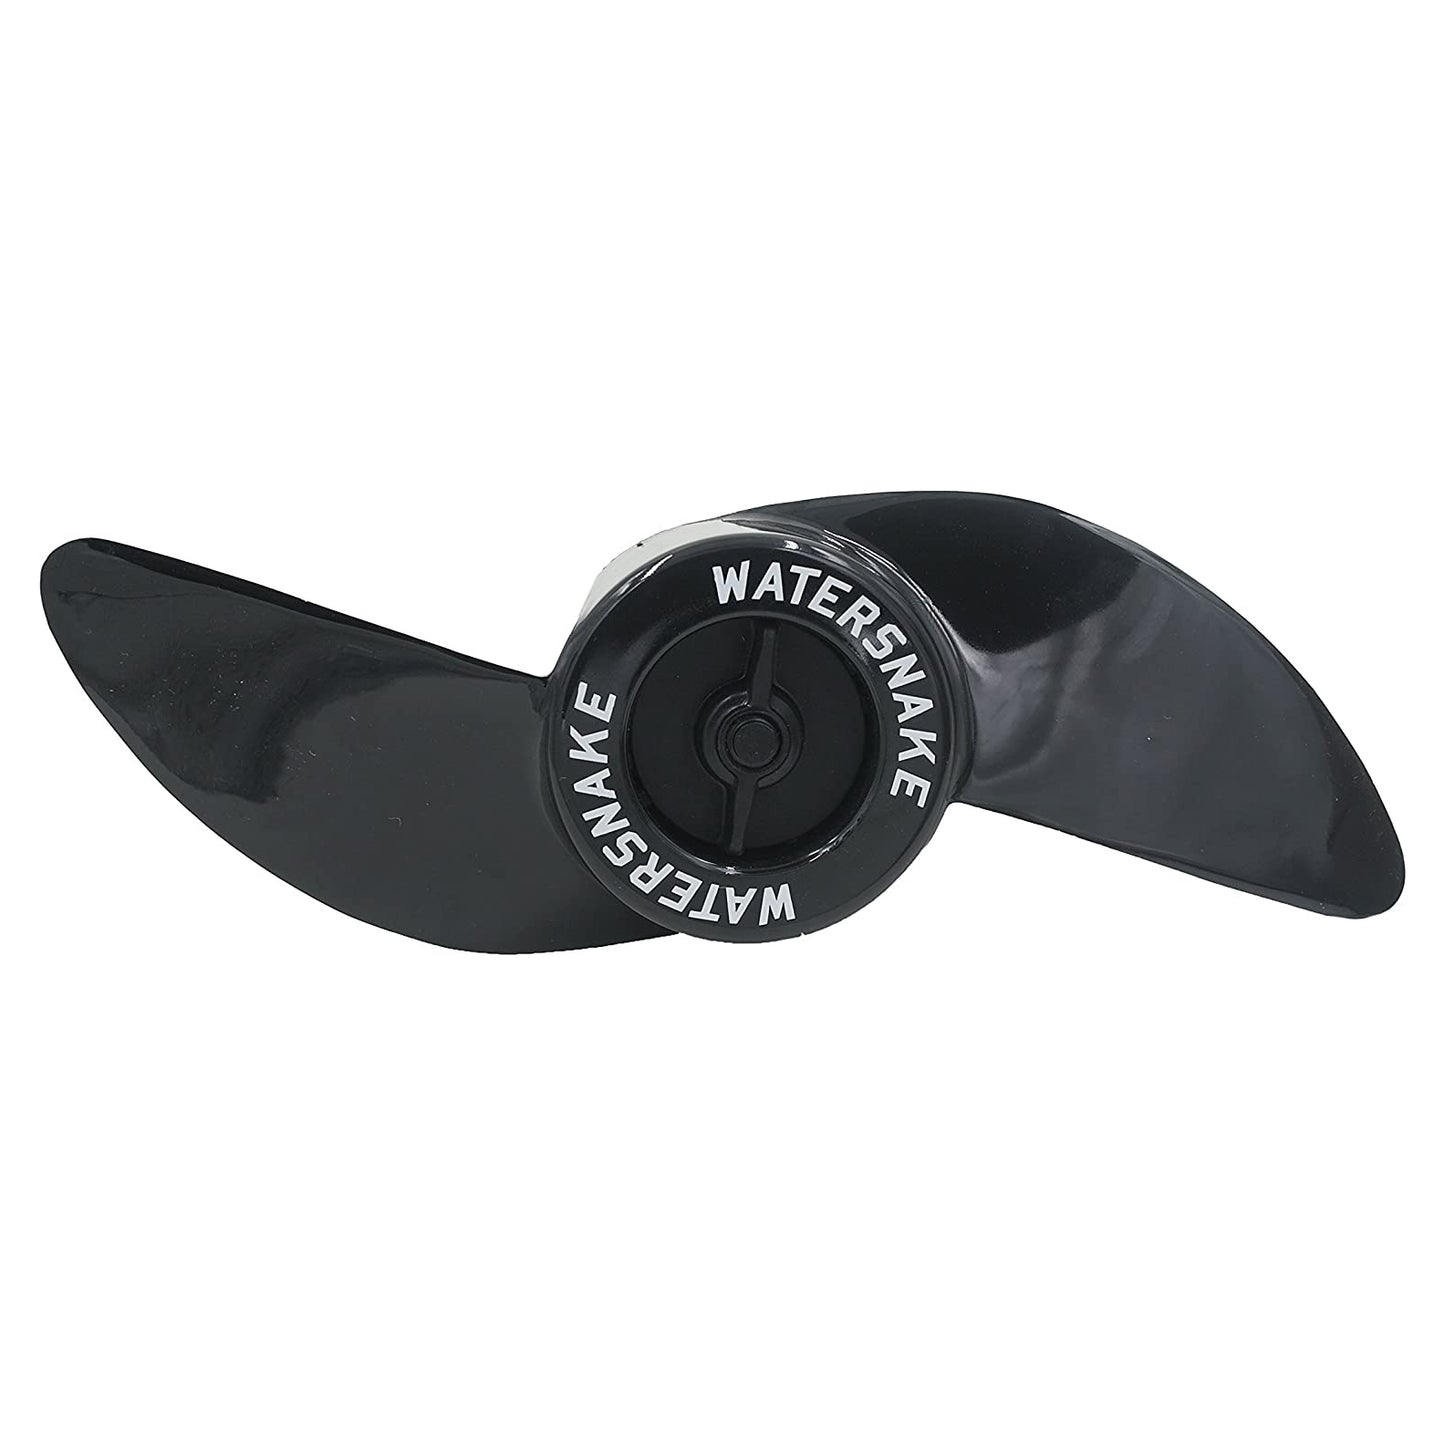 Kayak Accessory - Watersnake T24 - 2 Blade Prop